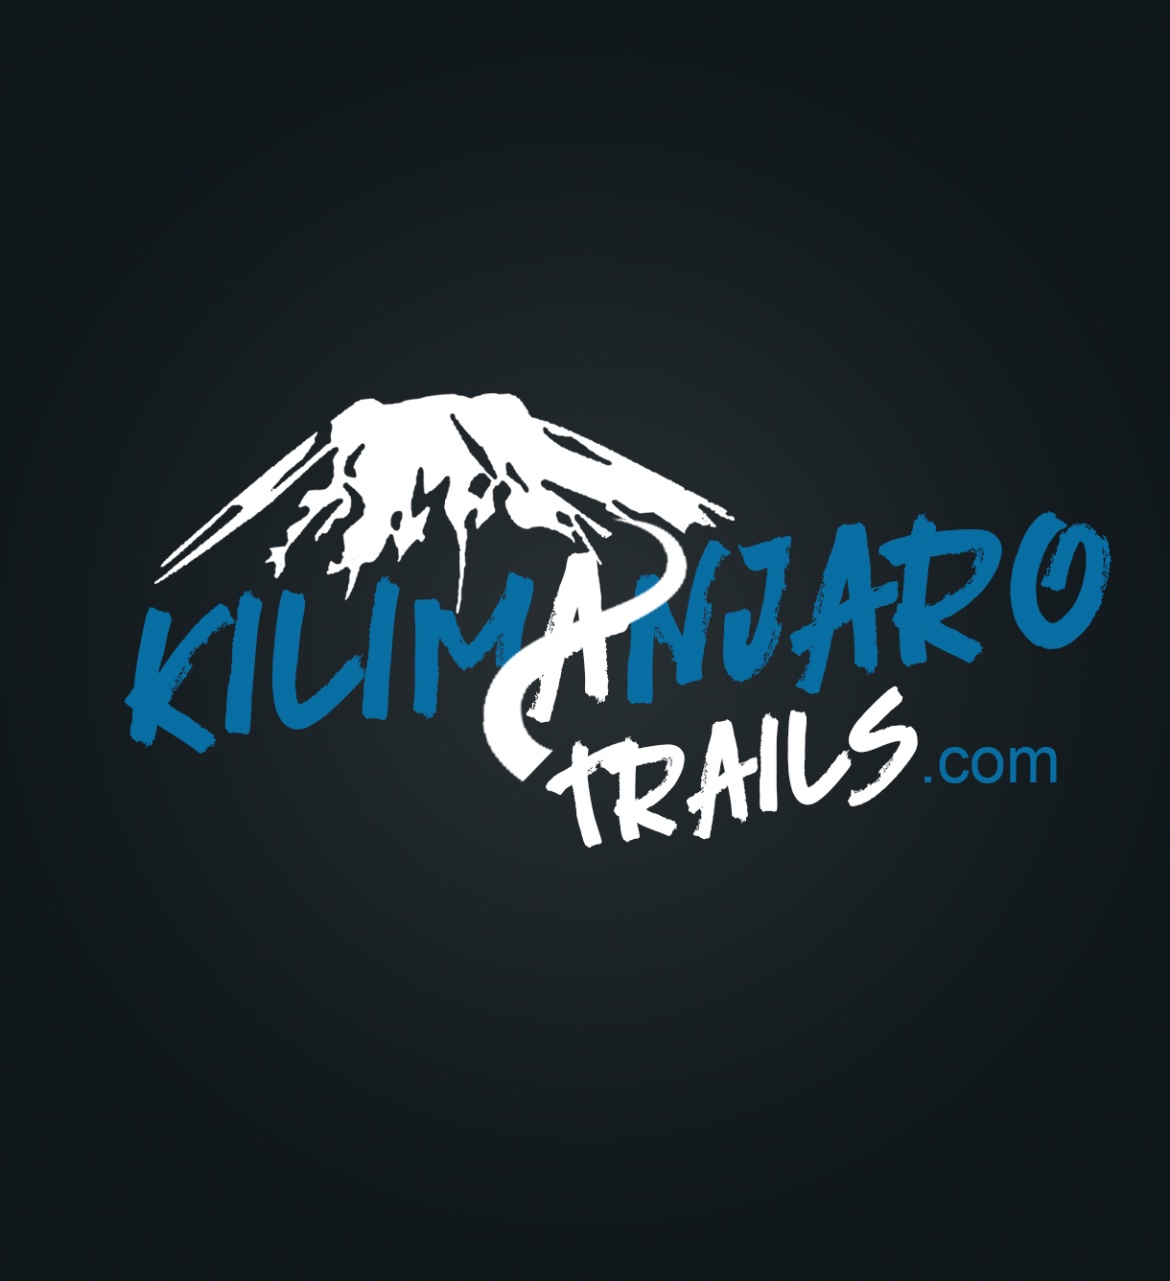 Why choose Kilimanjaro trails